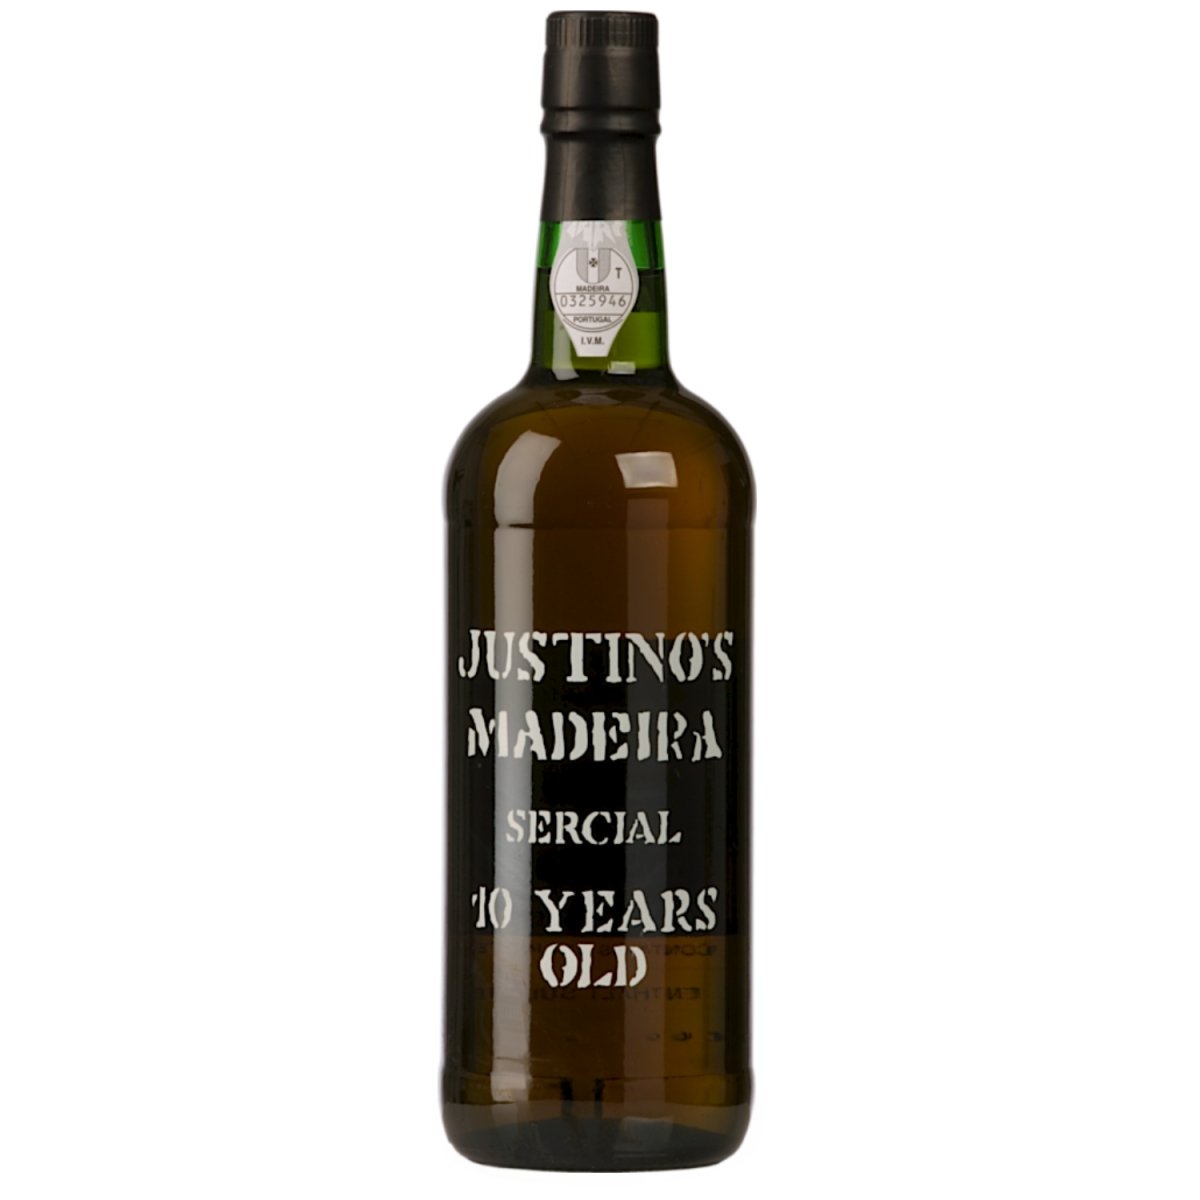 Vinhos Justino Henriques Justino's Sercial 10 Years Old Madeira Likörwein trocken Portugal (3 Flaschen) - Versanel -